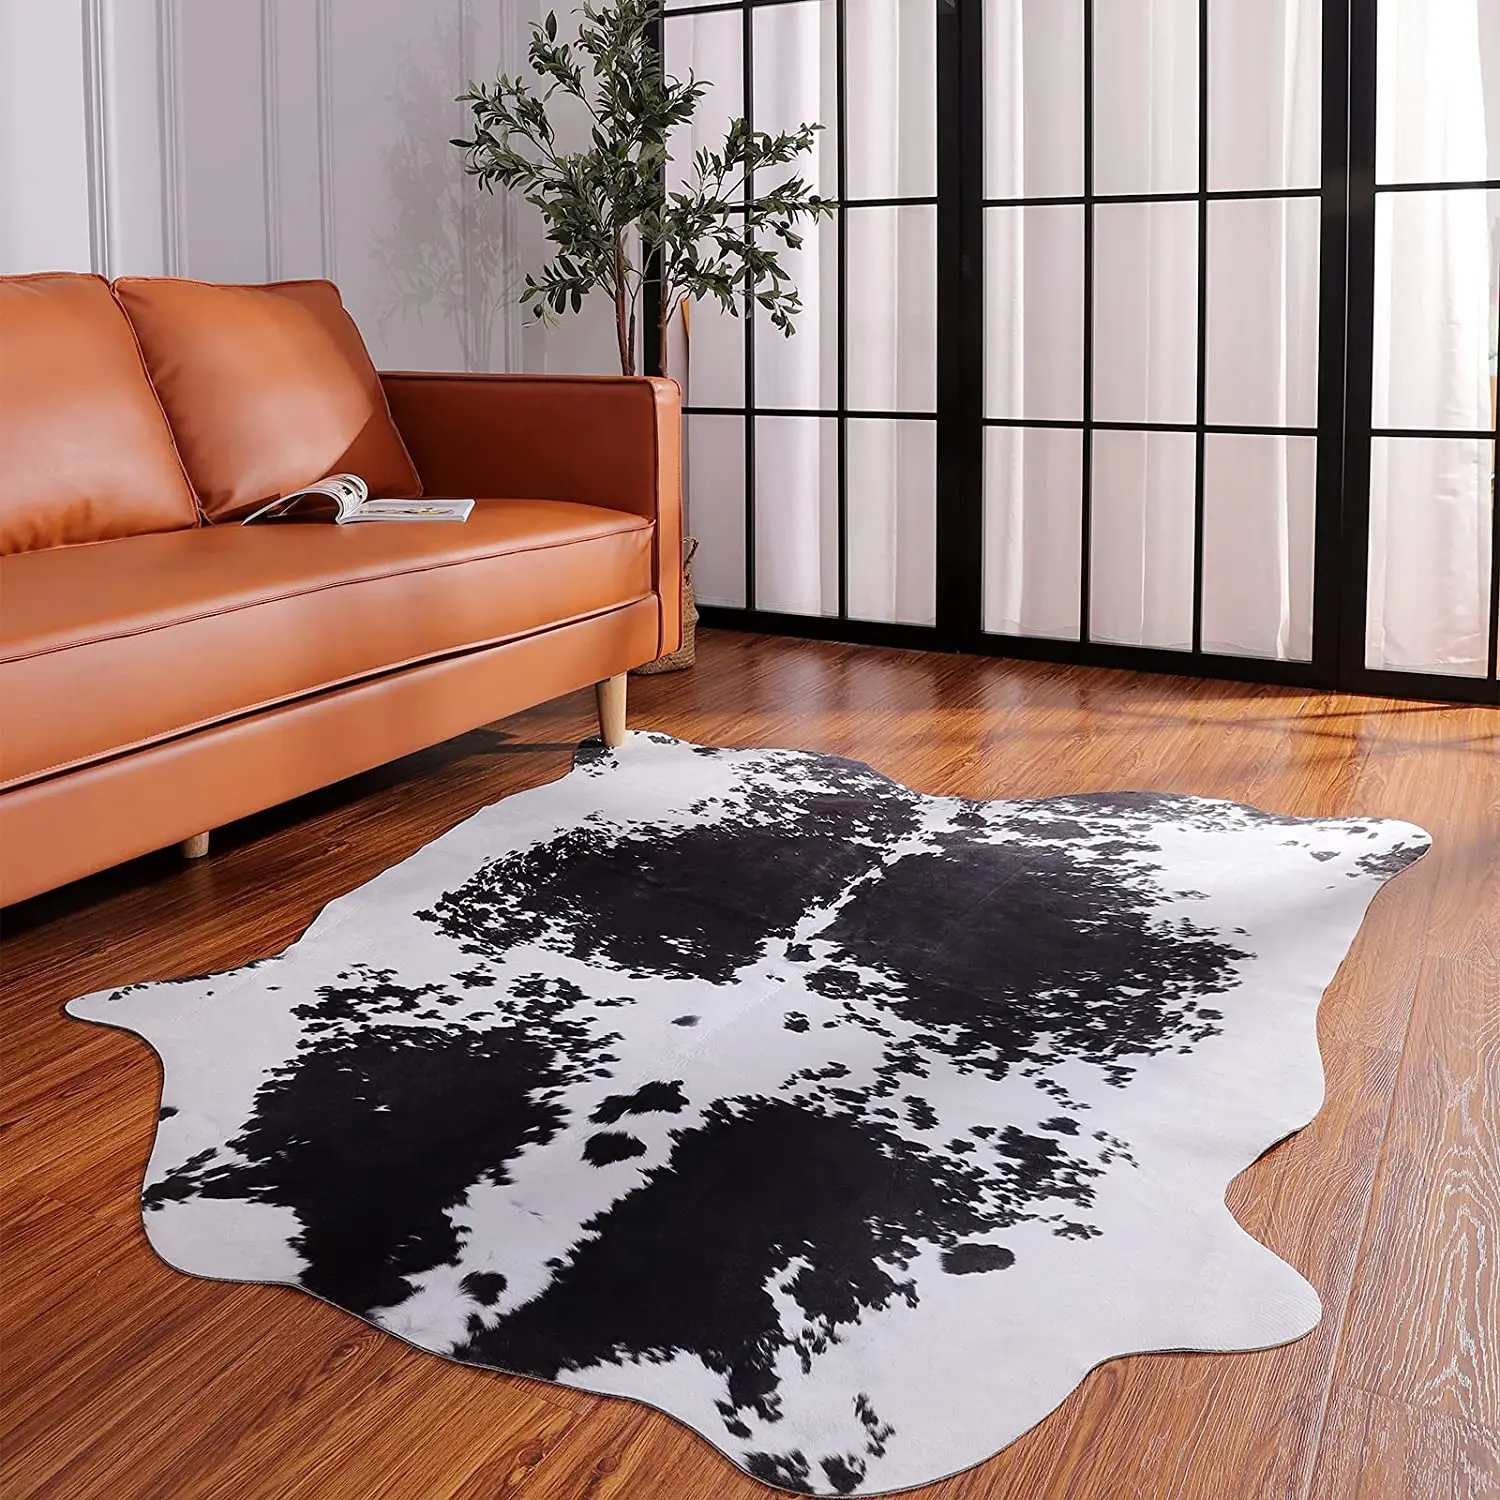 Luxury-Faux-Cowhide-Rug-Carpet-Cute-Cow-Hide-Rug-for-Living-Room-Bedroom-Western-Home-Decor-2